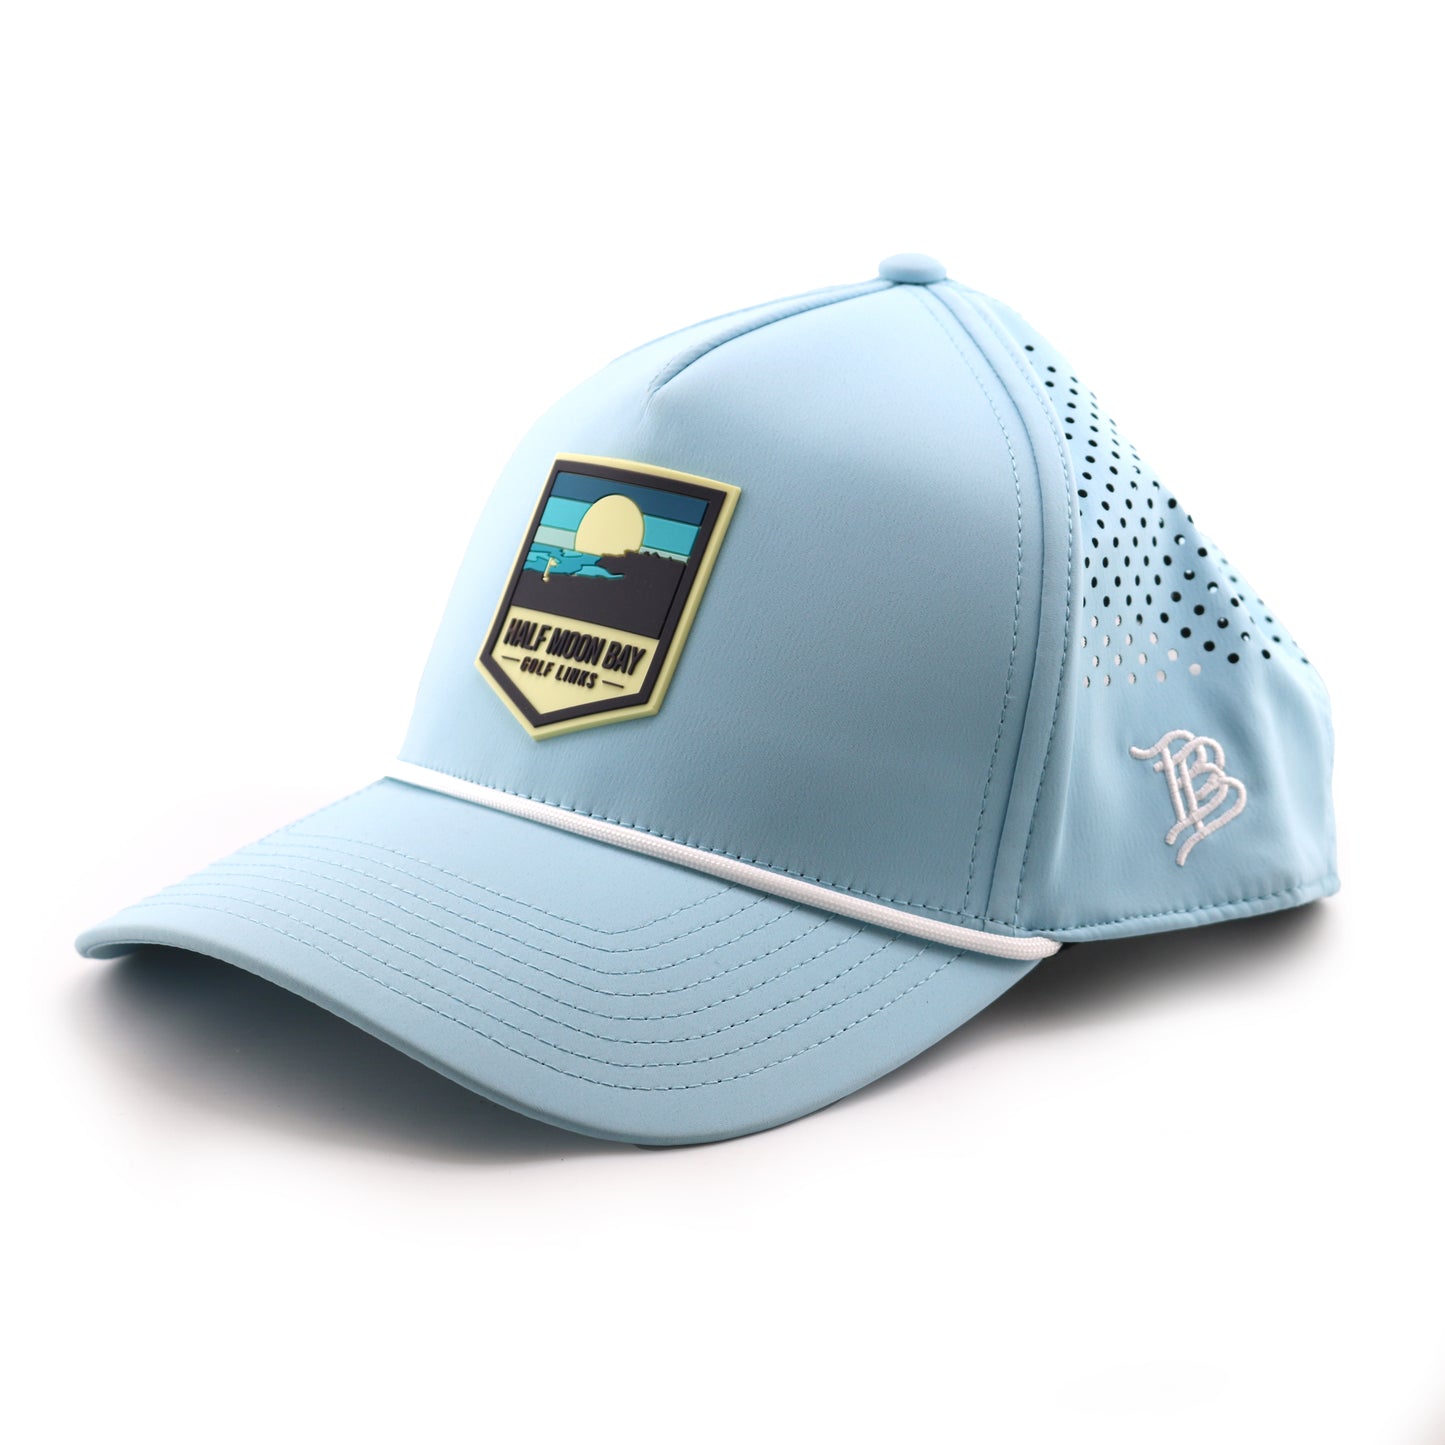 Branded Bills Half Moon Bay Golf Links hat